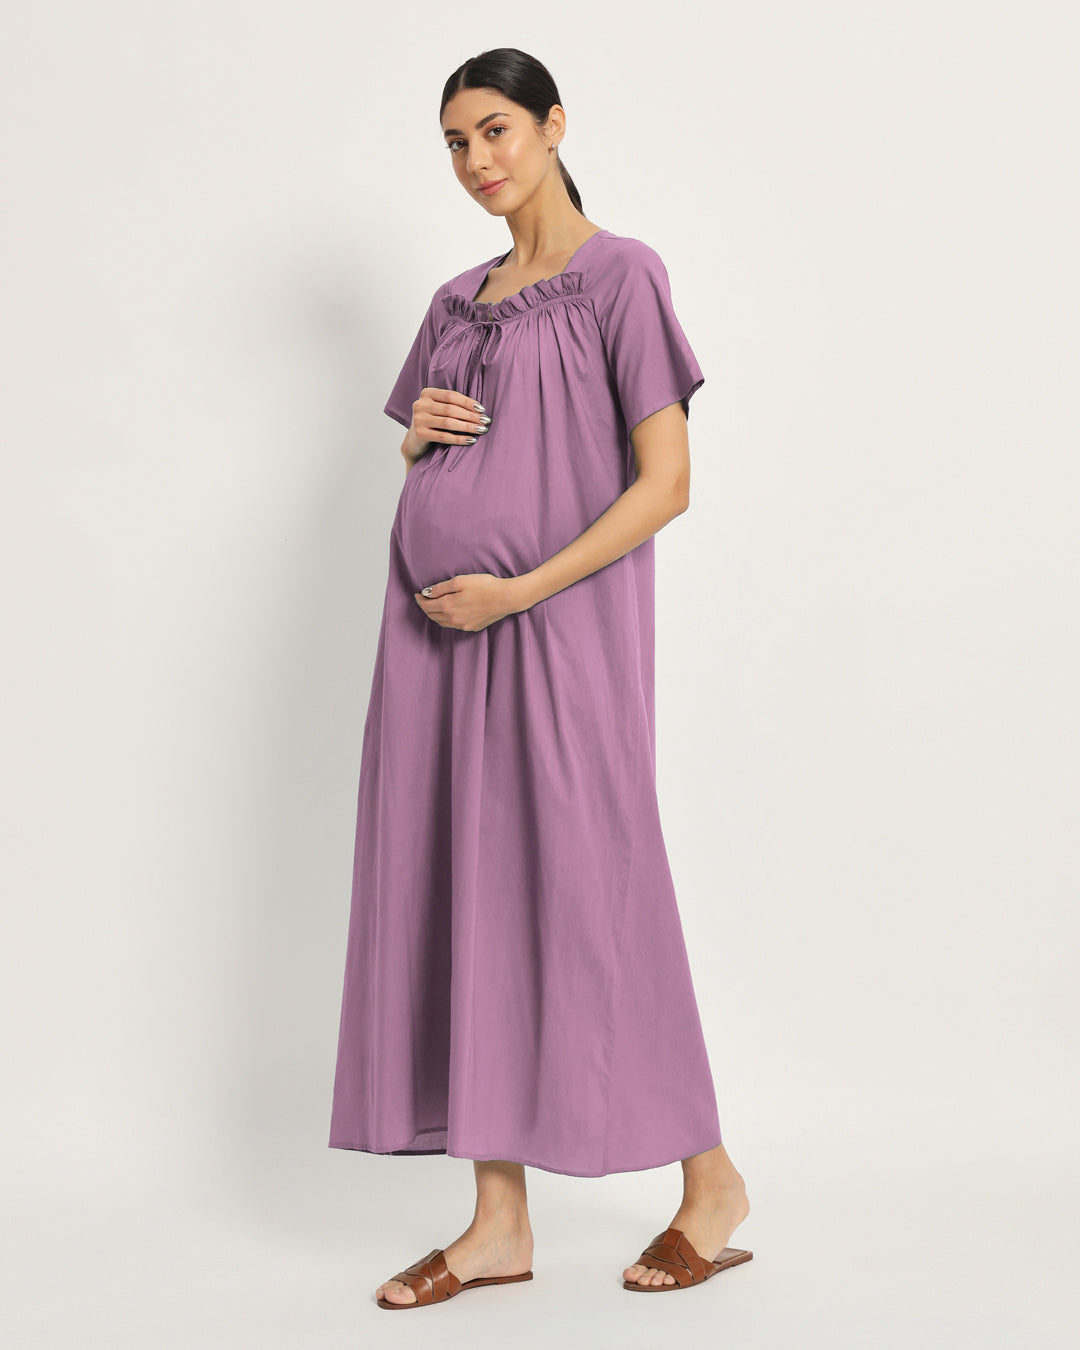 Combo: Iris Pink & Wisteria Purple Nurture N' Shine Maternity & Nursing Dress